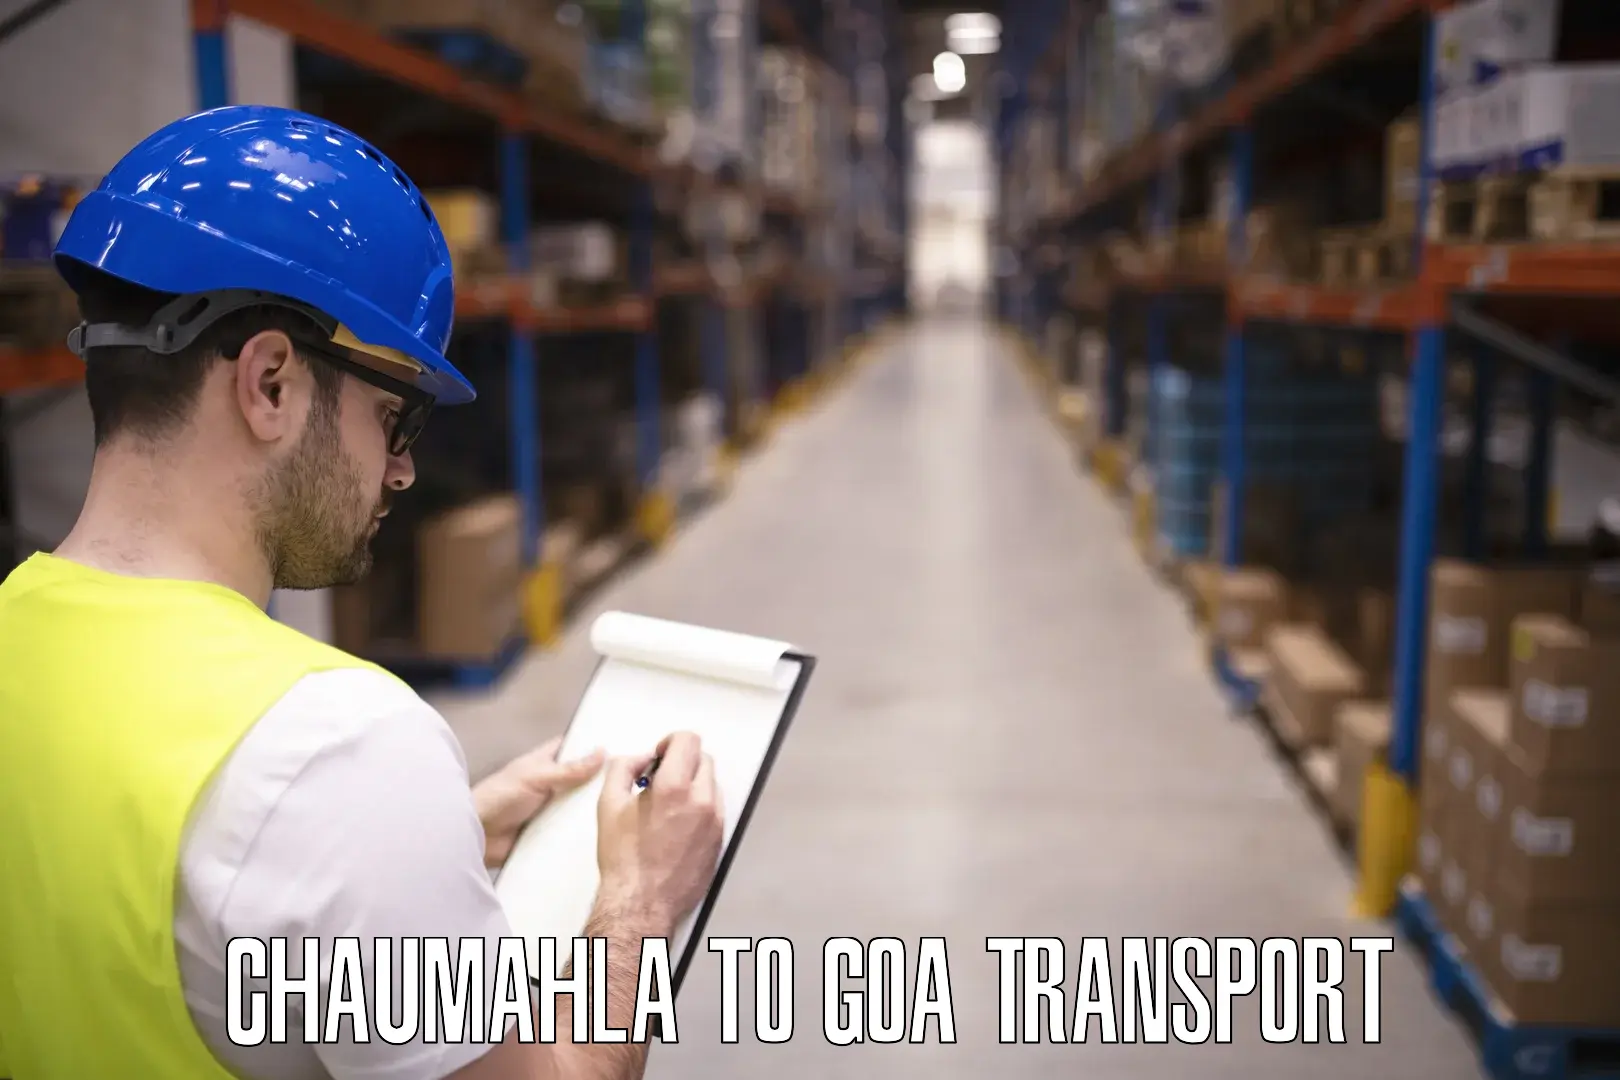 Furniture transport service Chaumahla to Goa